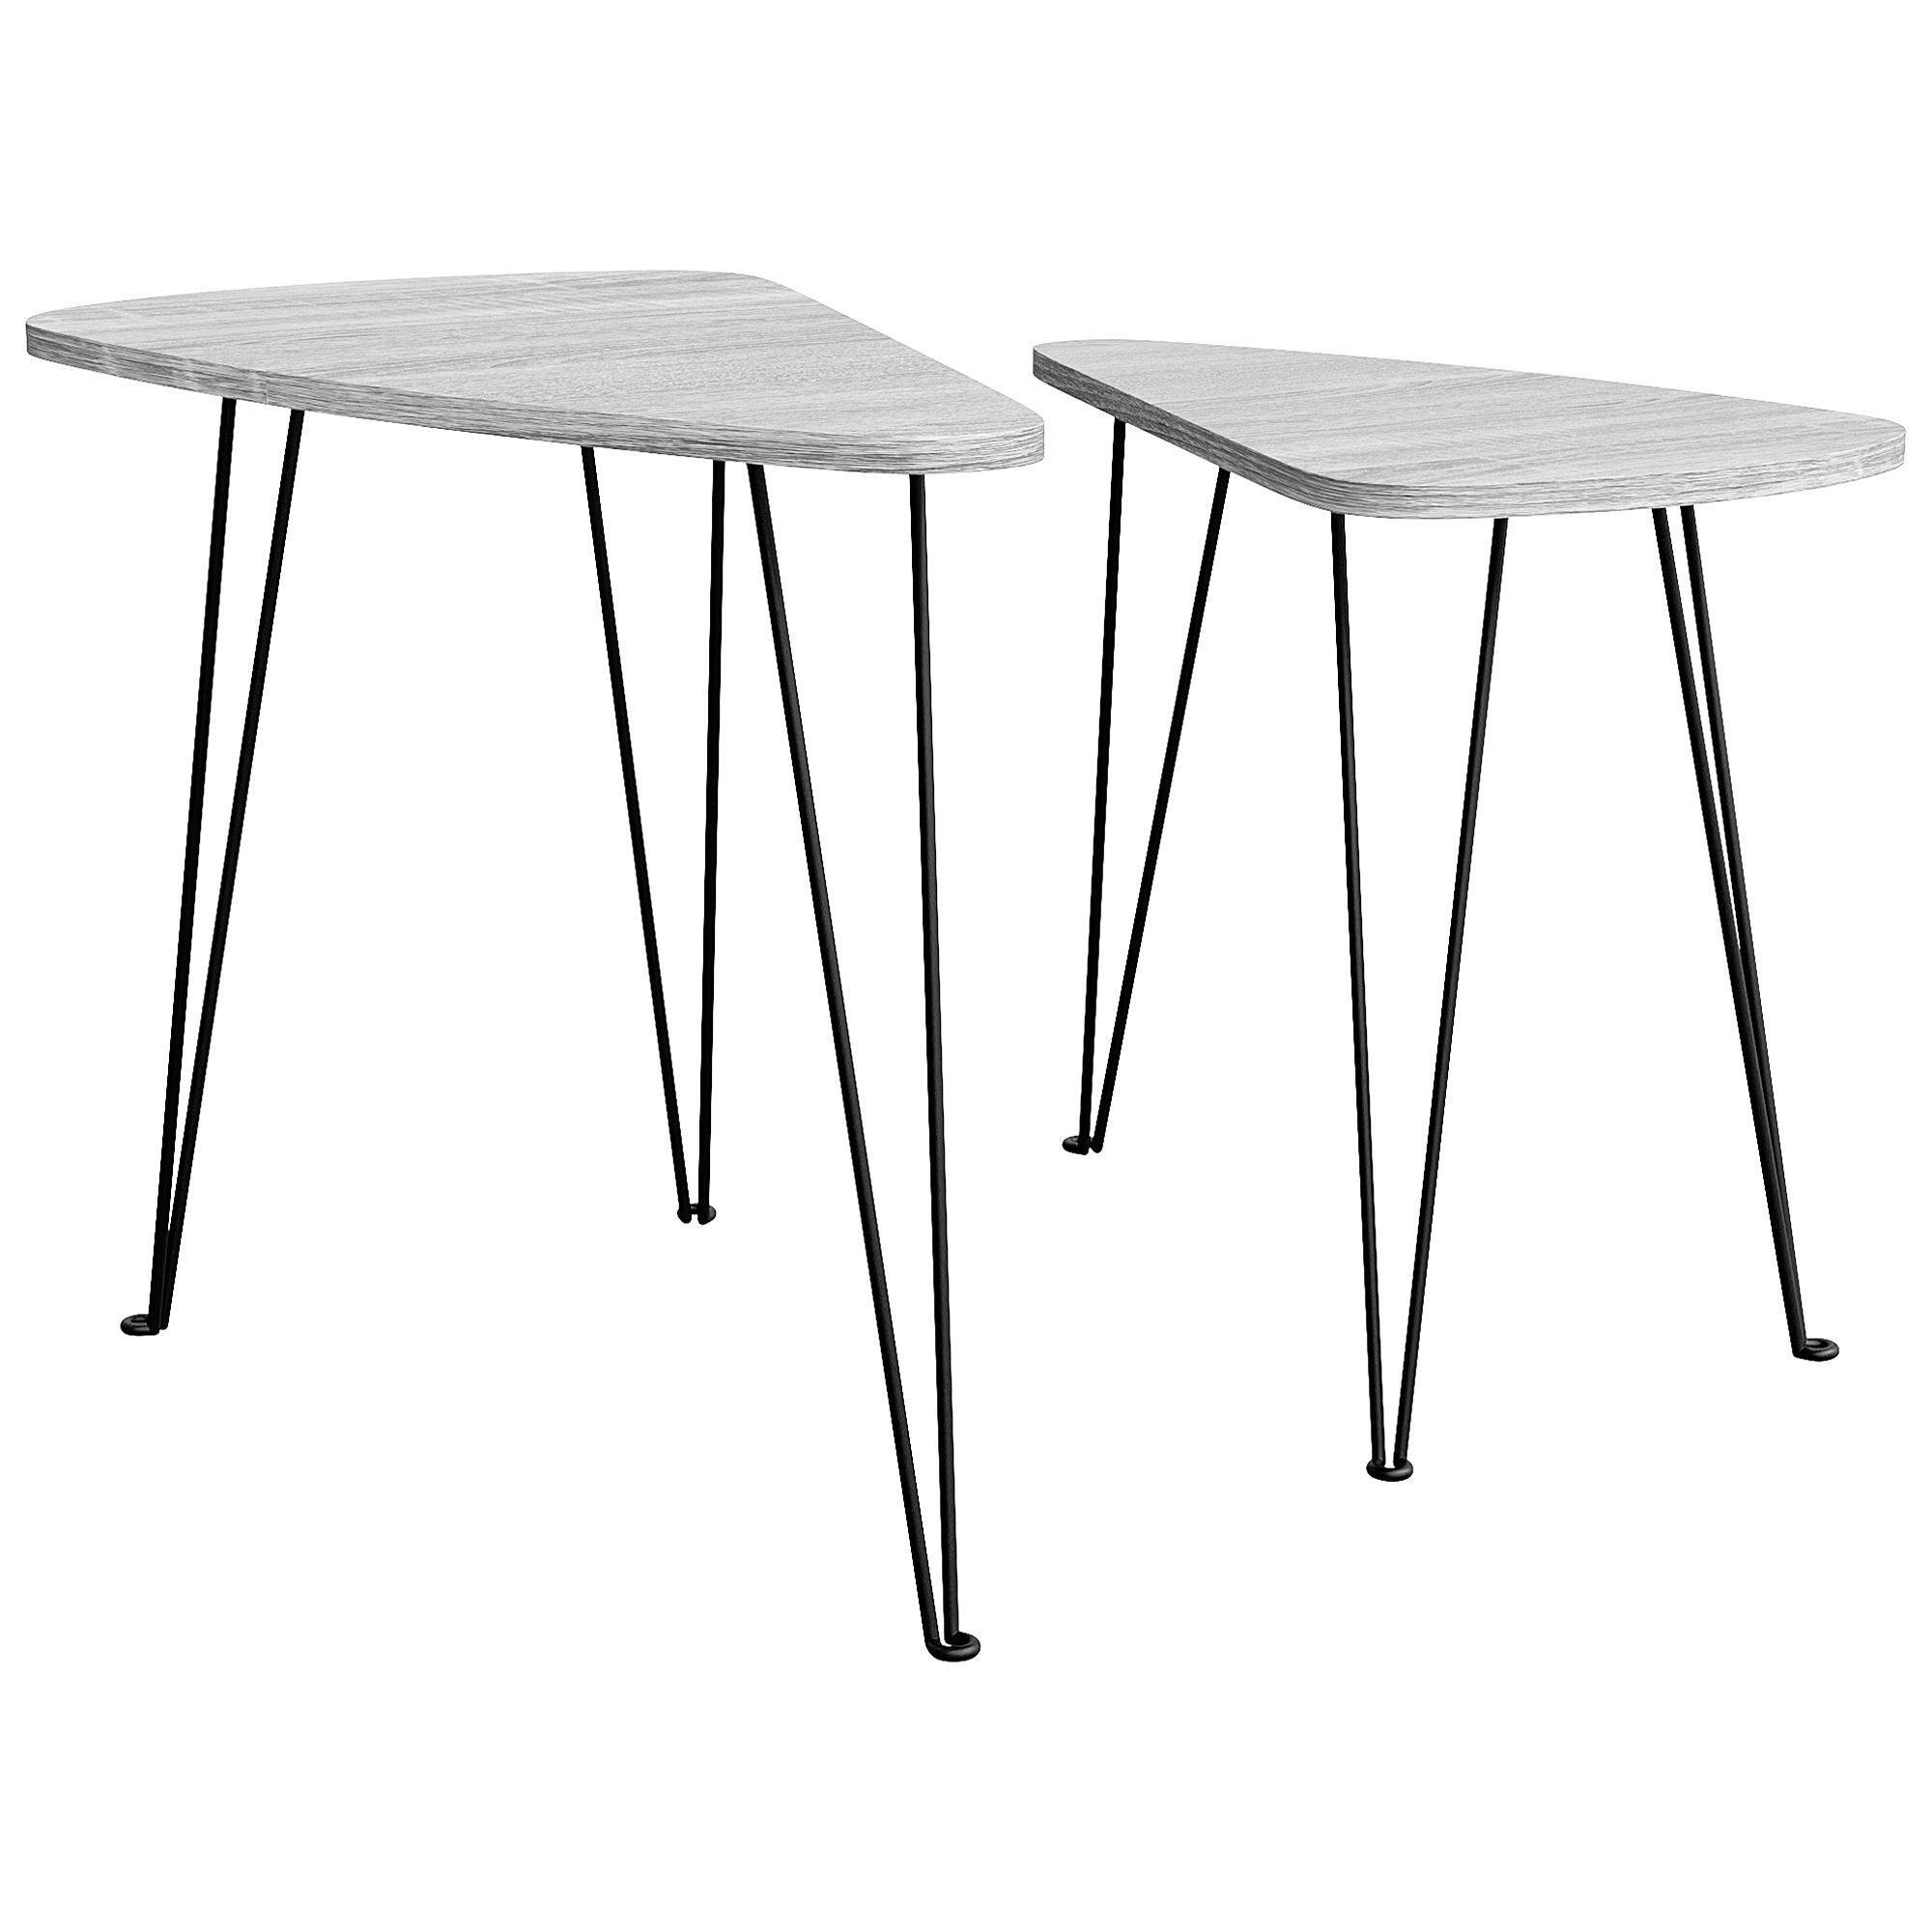 Vida Designs Brooklyn Nest of 2 Oval Tables Set Of 2 MDF Living Room Coffee Side Table Furniture - image 1